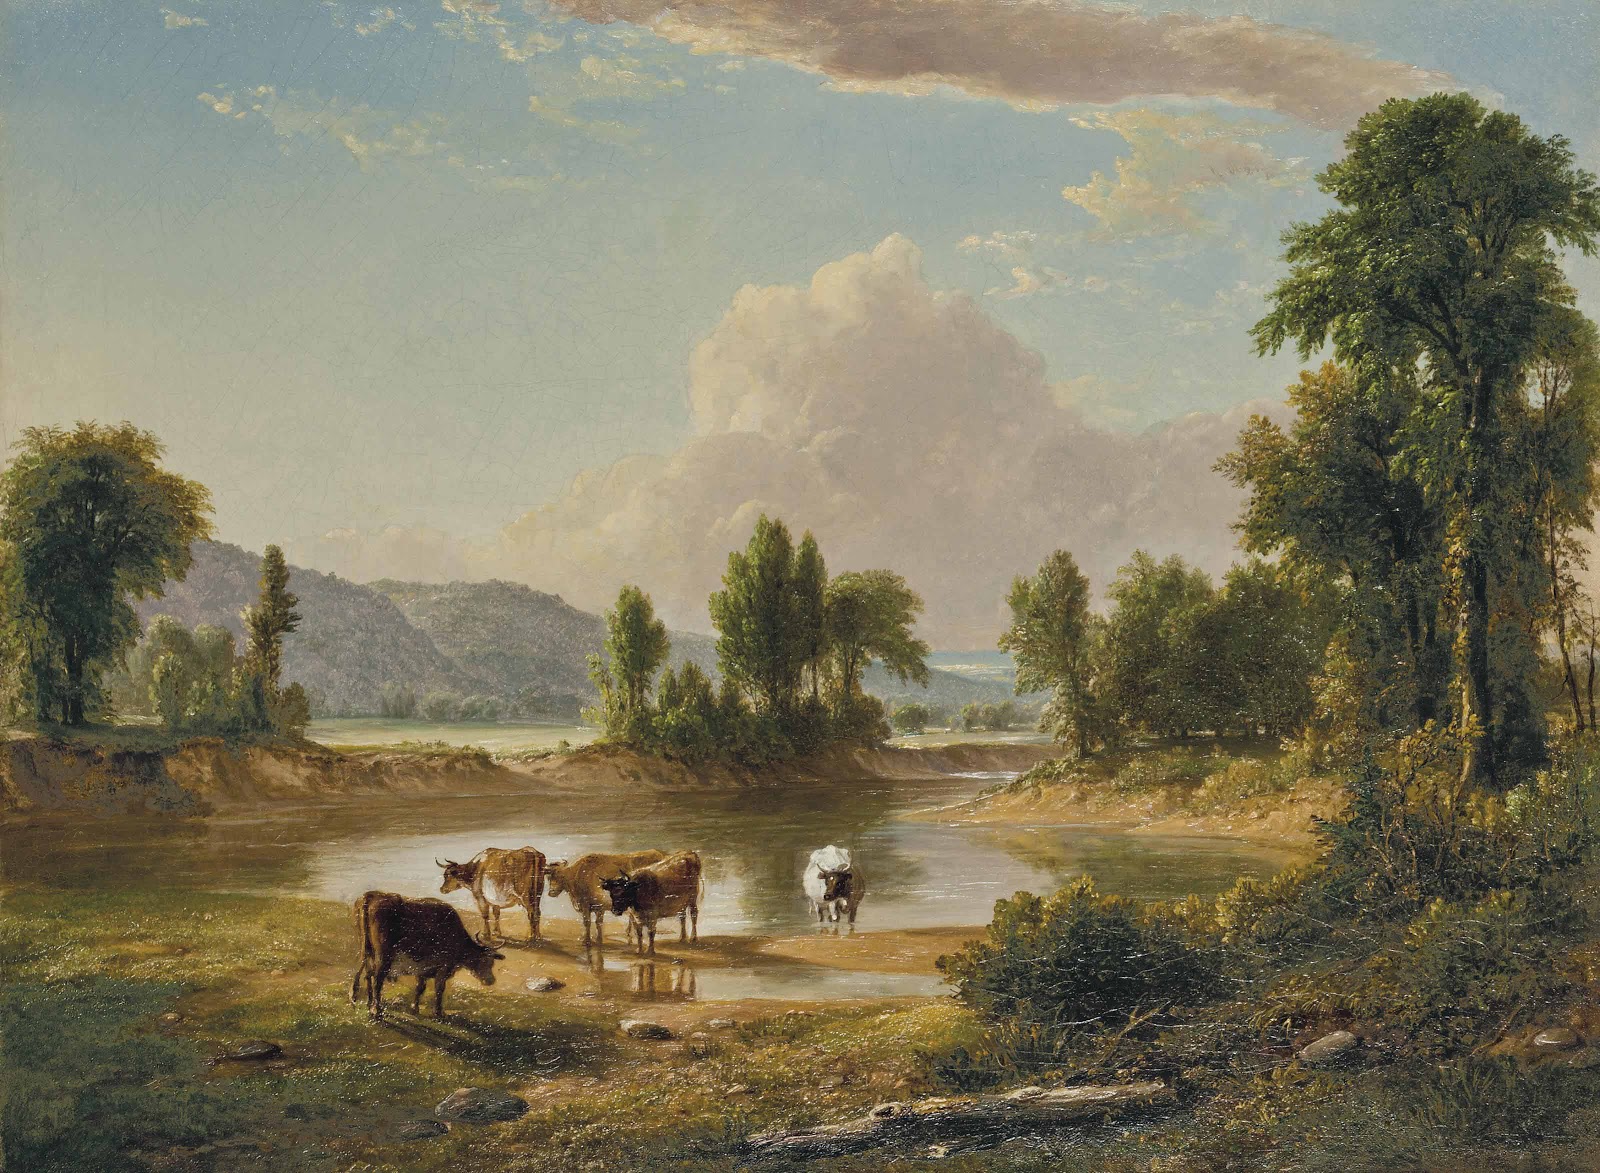 Asher+Brown+Durand-1796-1886 (29).jpg